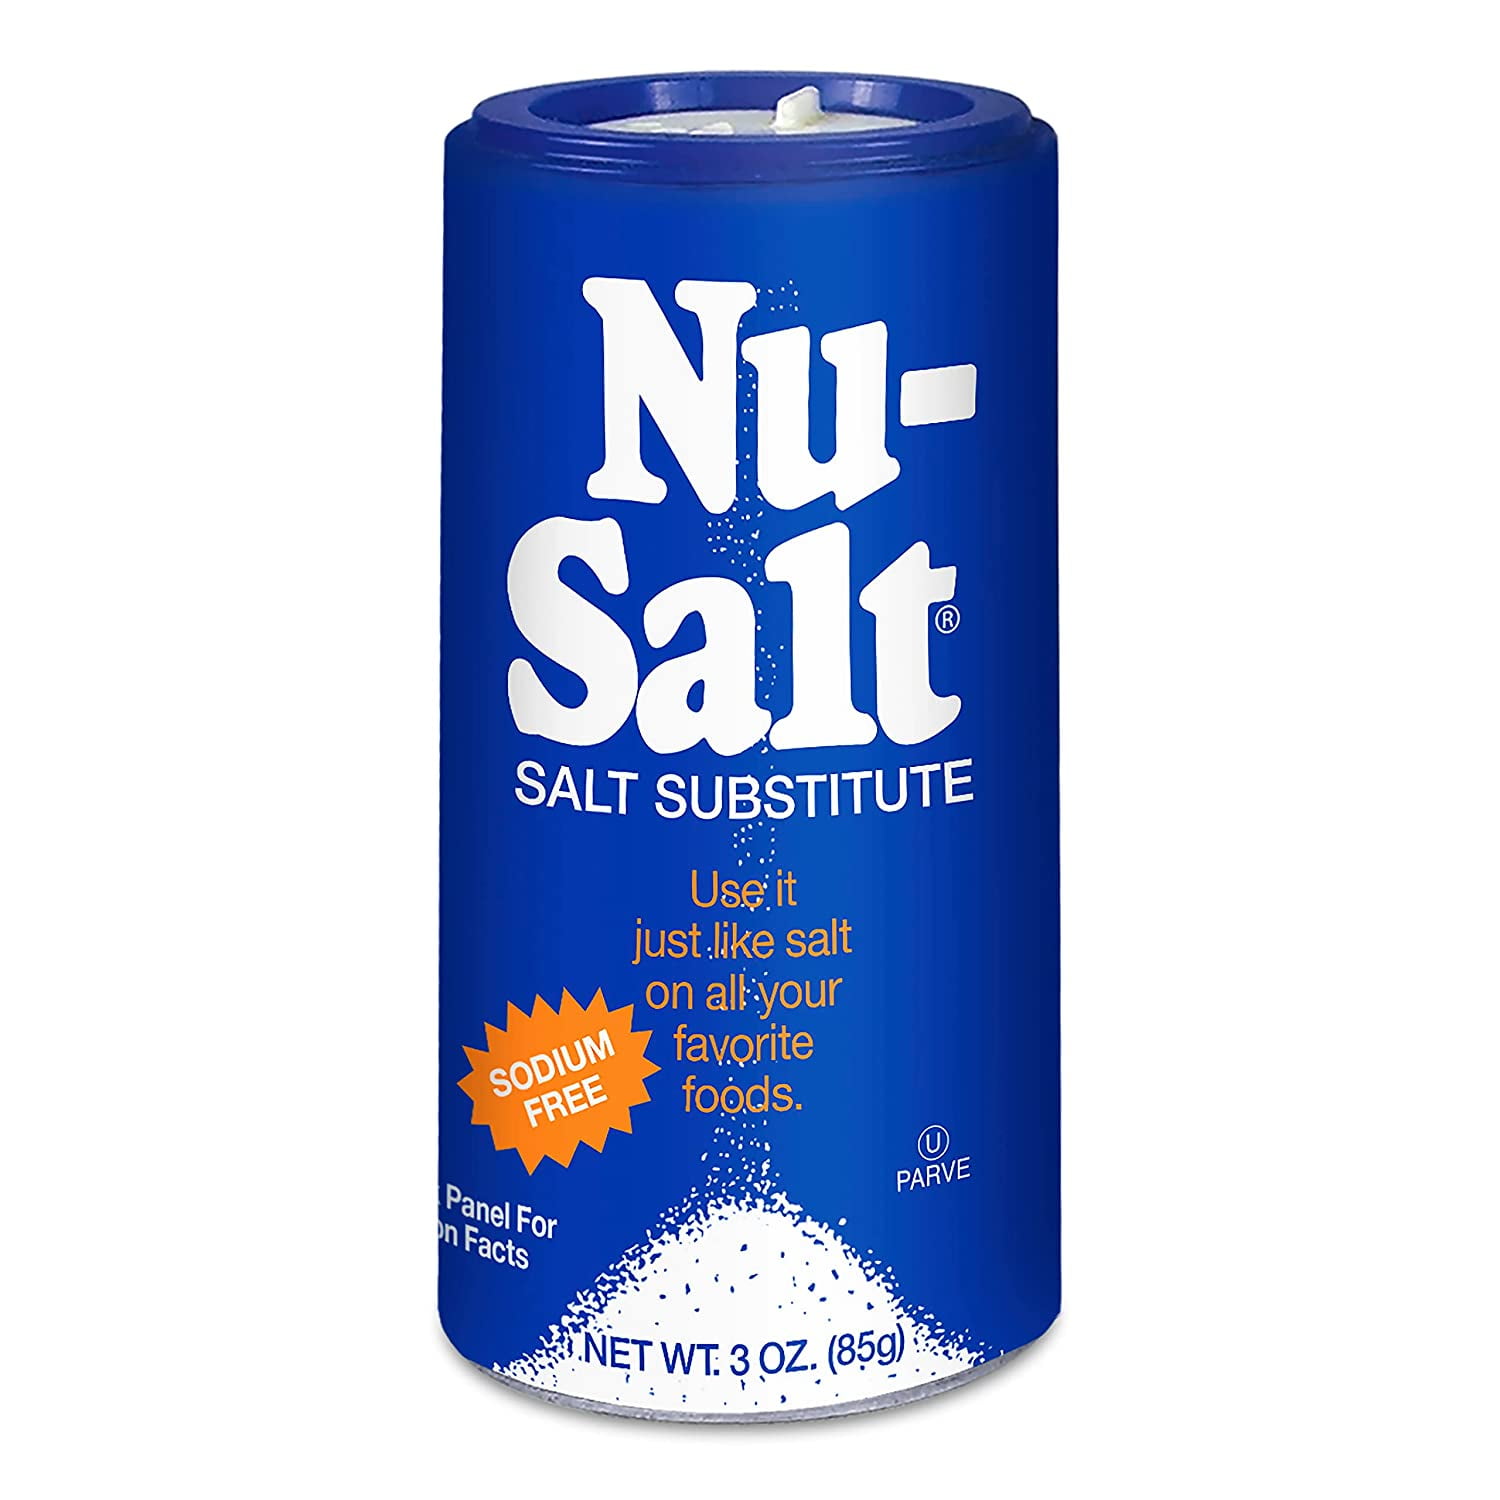 Salt For Life Salt Substitute - 10.5 oz. - Tasty Low Sodium Salt &  Potassium Salt Substitute for